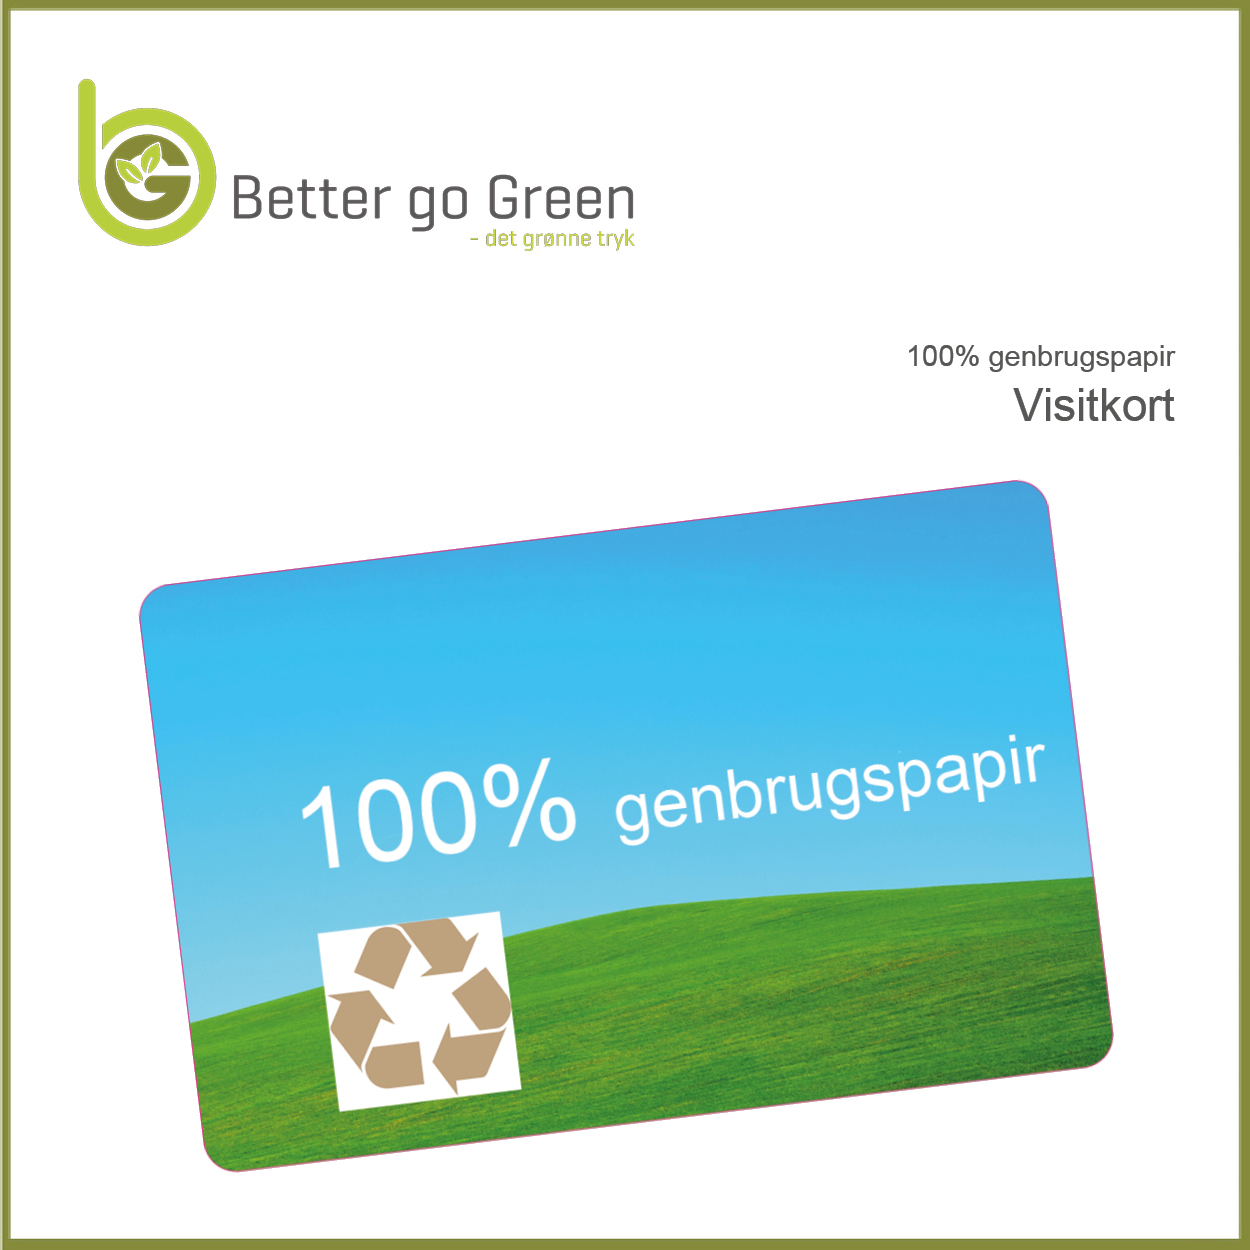 Visitkort i 100% genbrugspapir. BetterGoGreen.dk